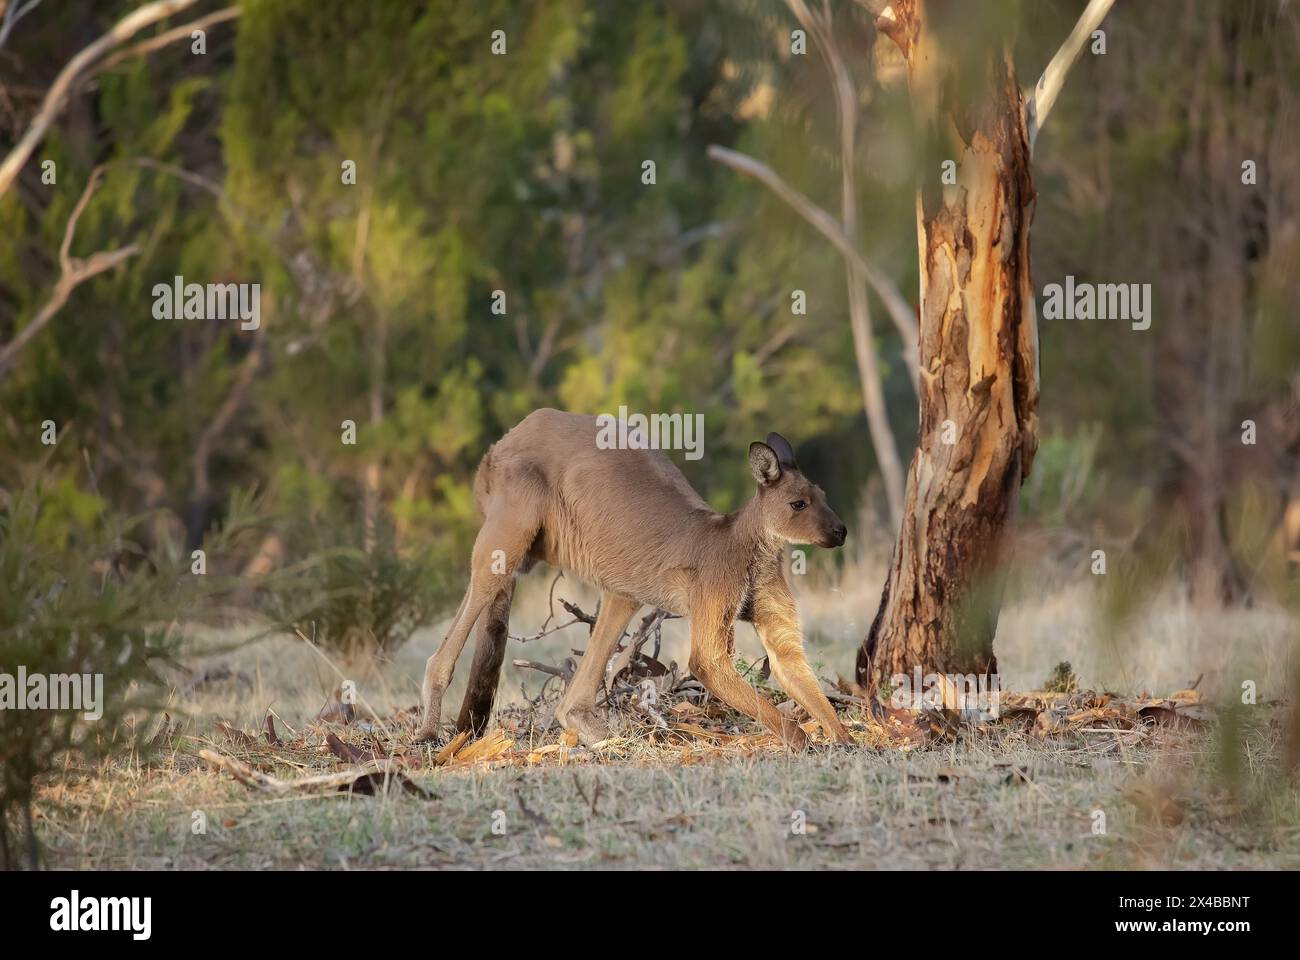 Wild big kangaroo grazes under trees Stock Photo